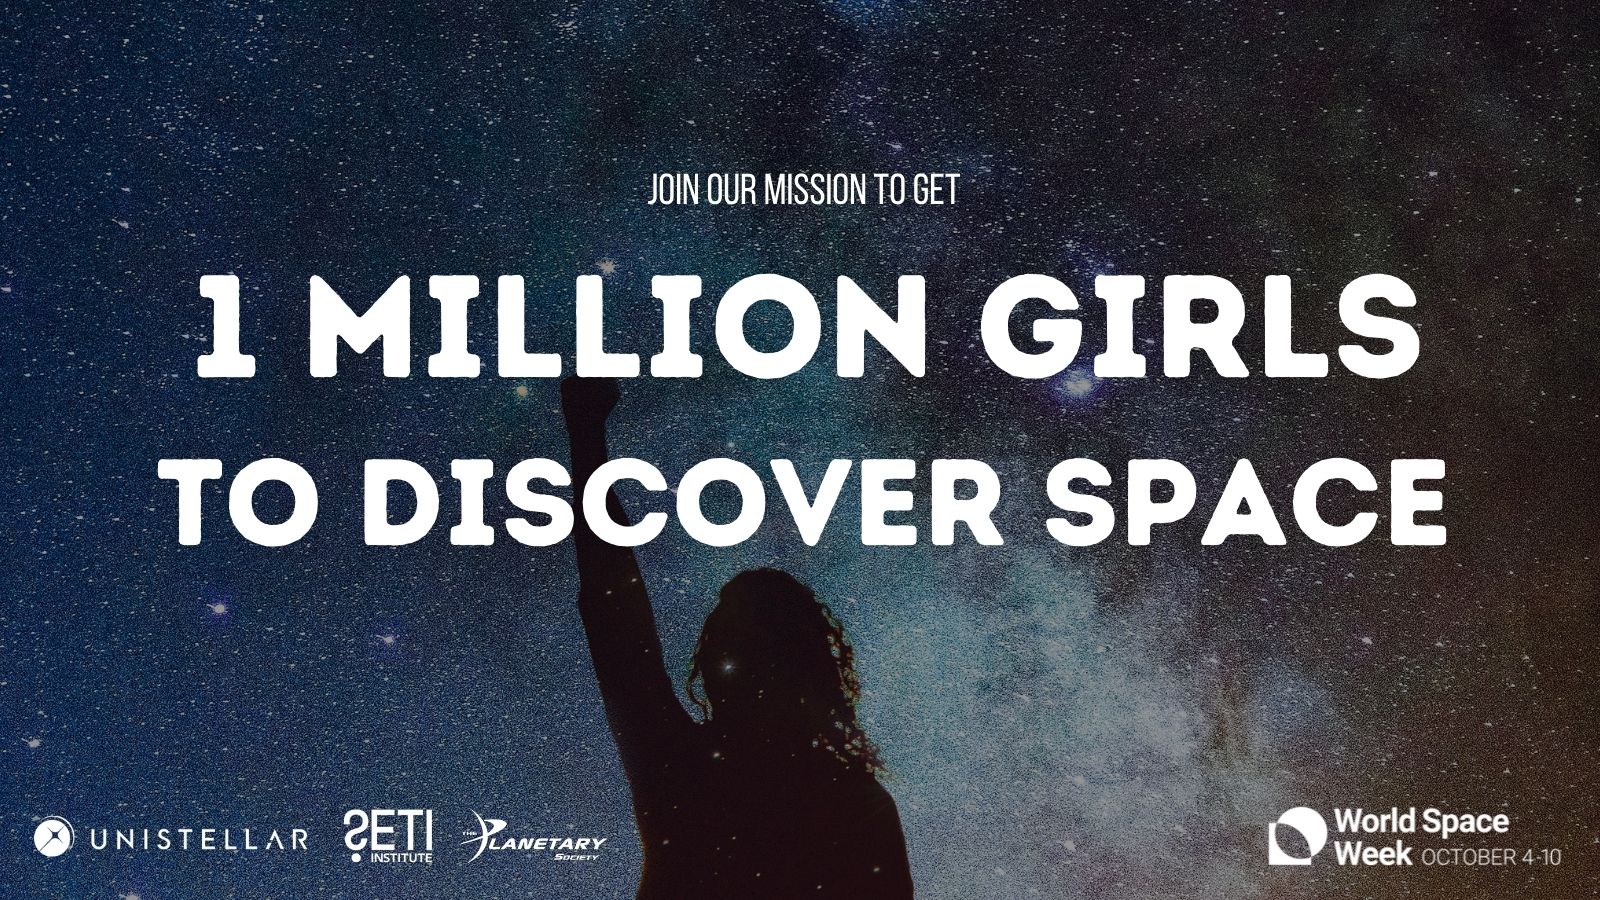 Unistellar and SETI partner to inspire girls.